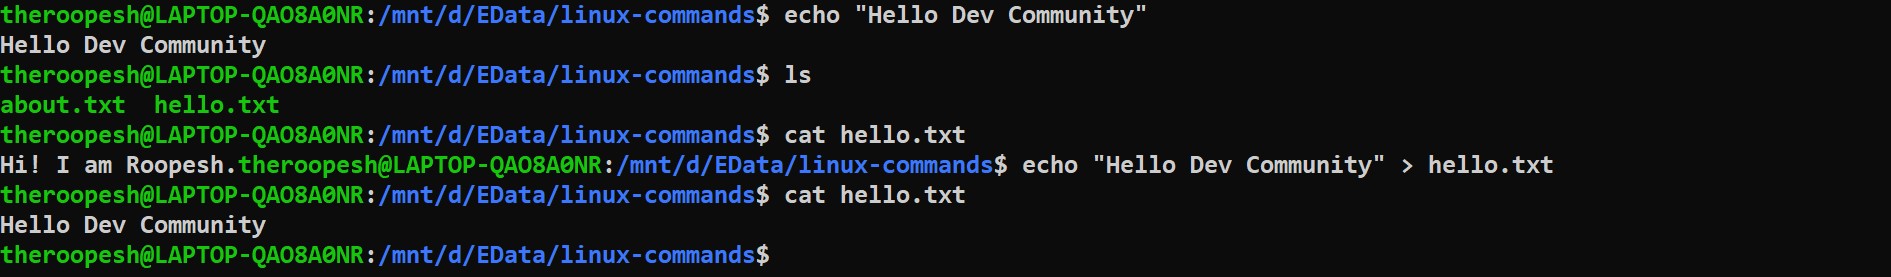 echo-write-command.jpg